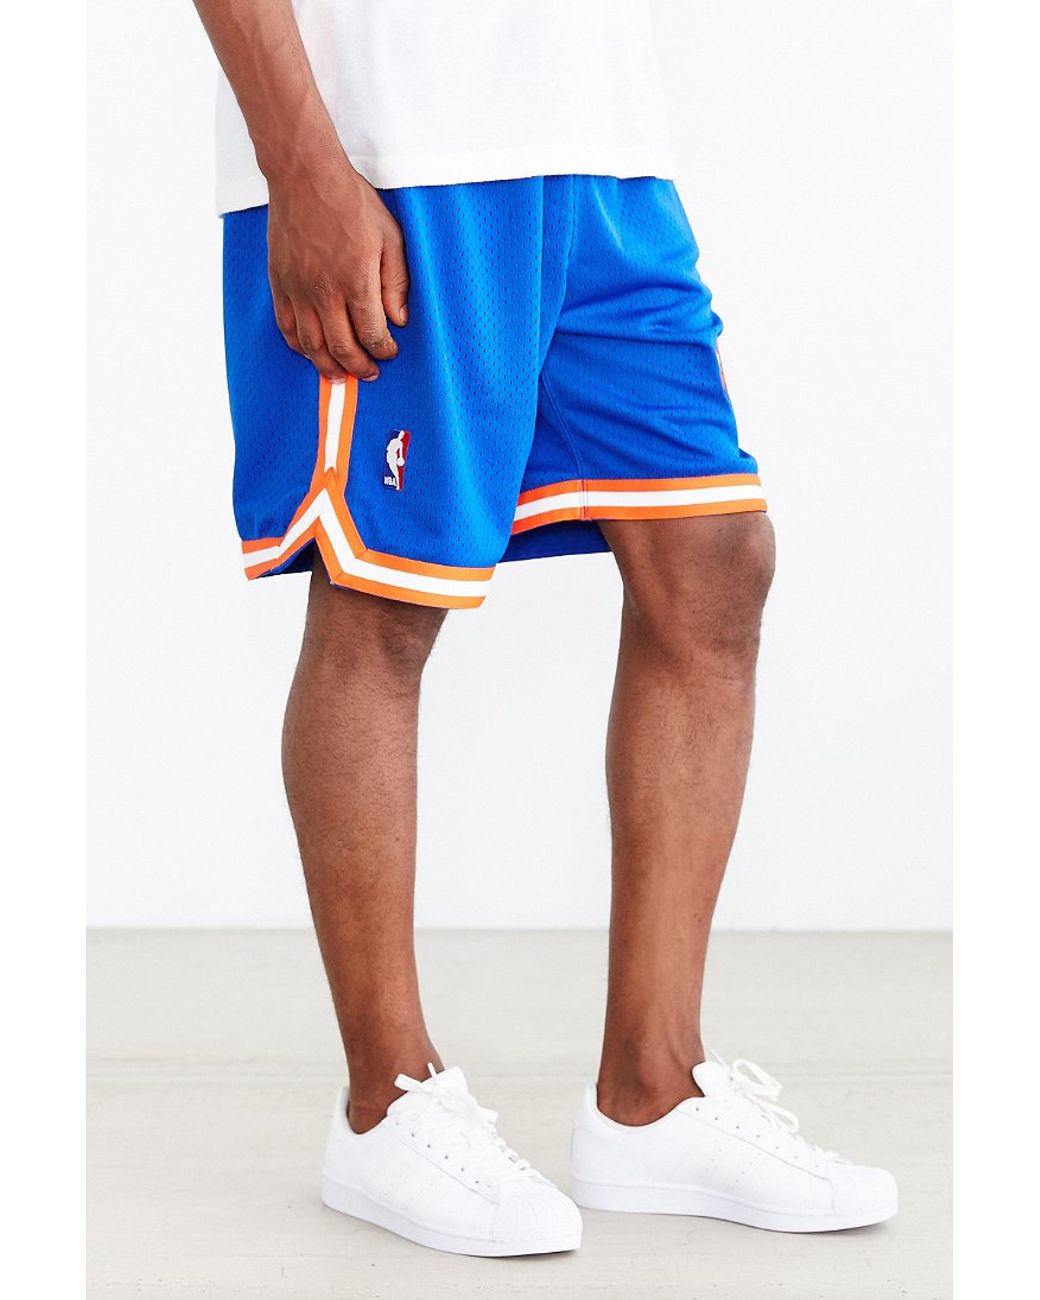 knicks authentic shorts